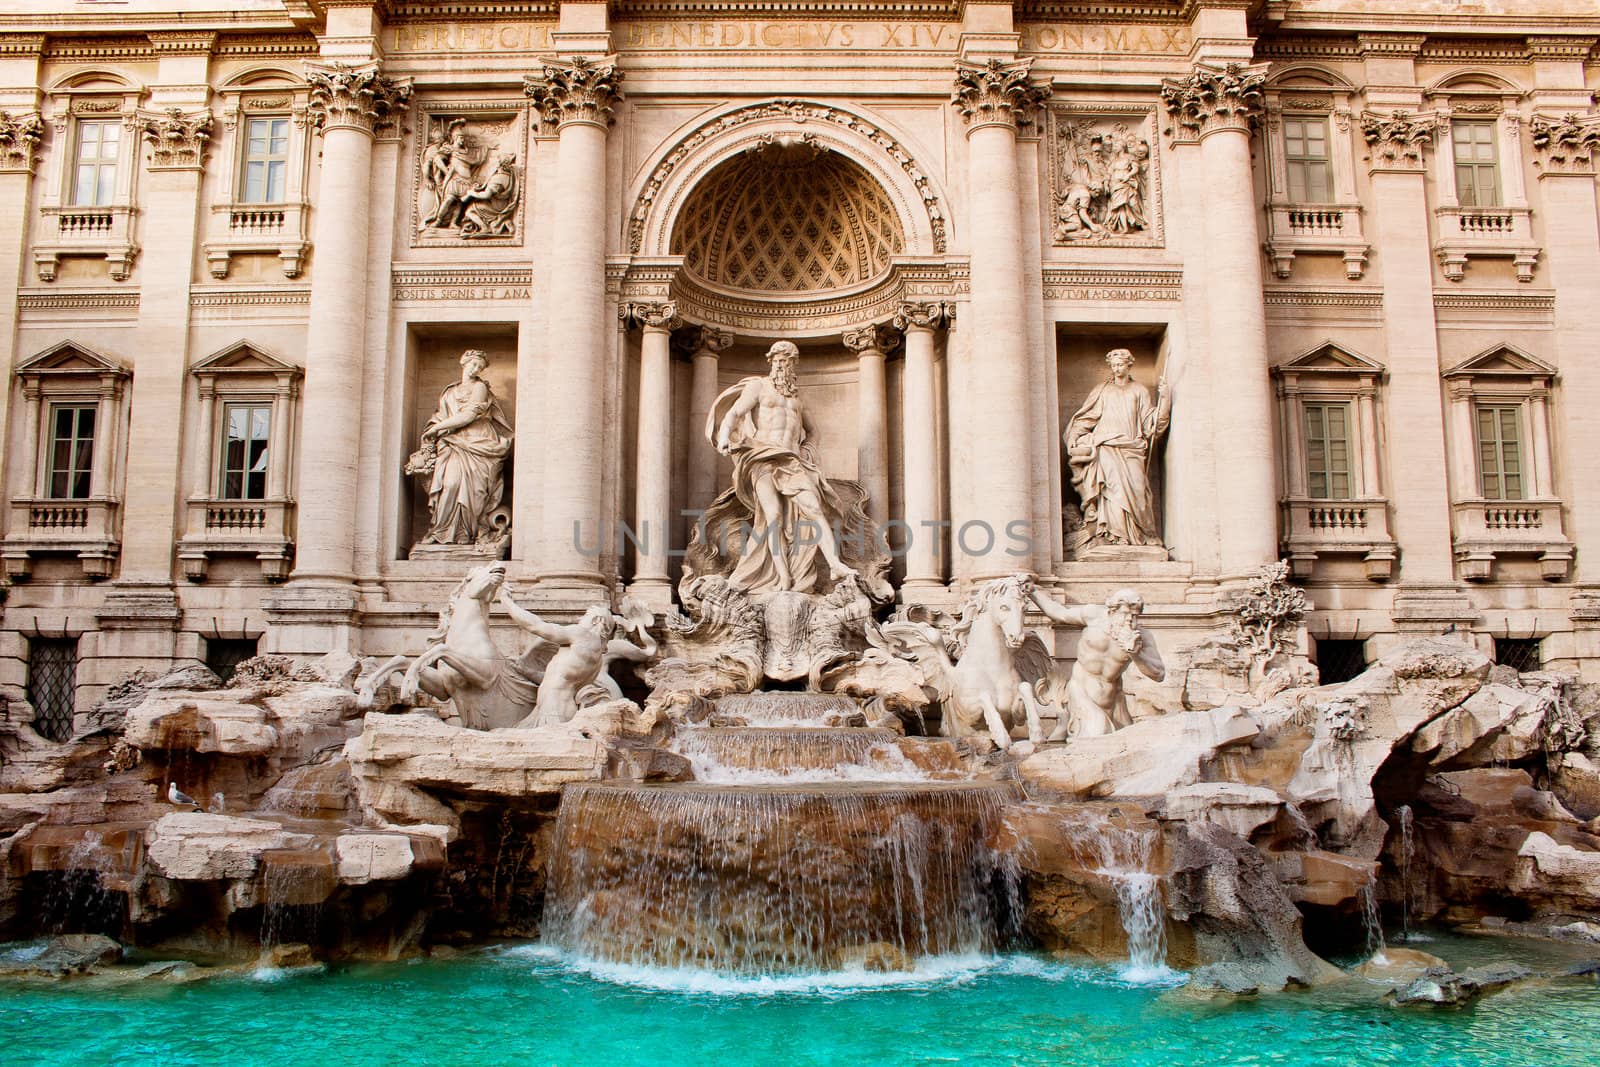 Trevi Fountain - famous landmark in Rome by bloodua